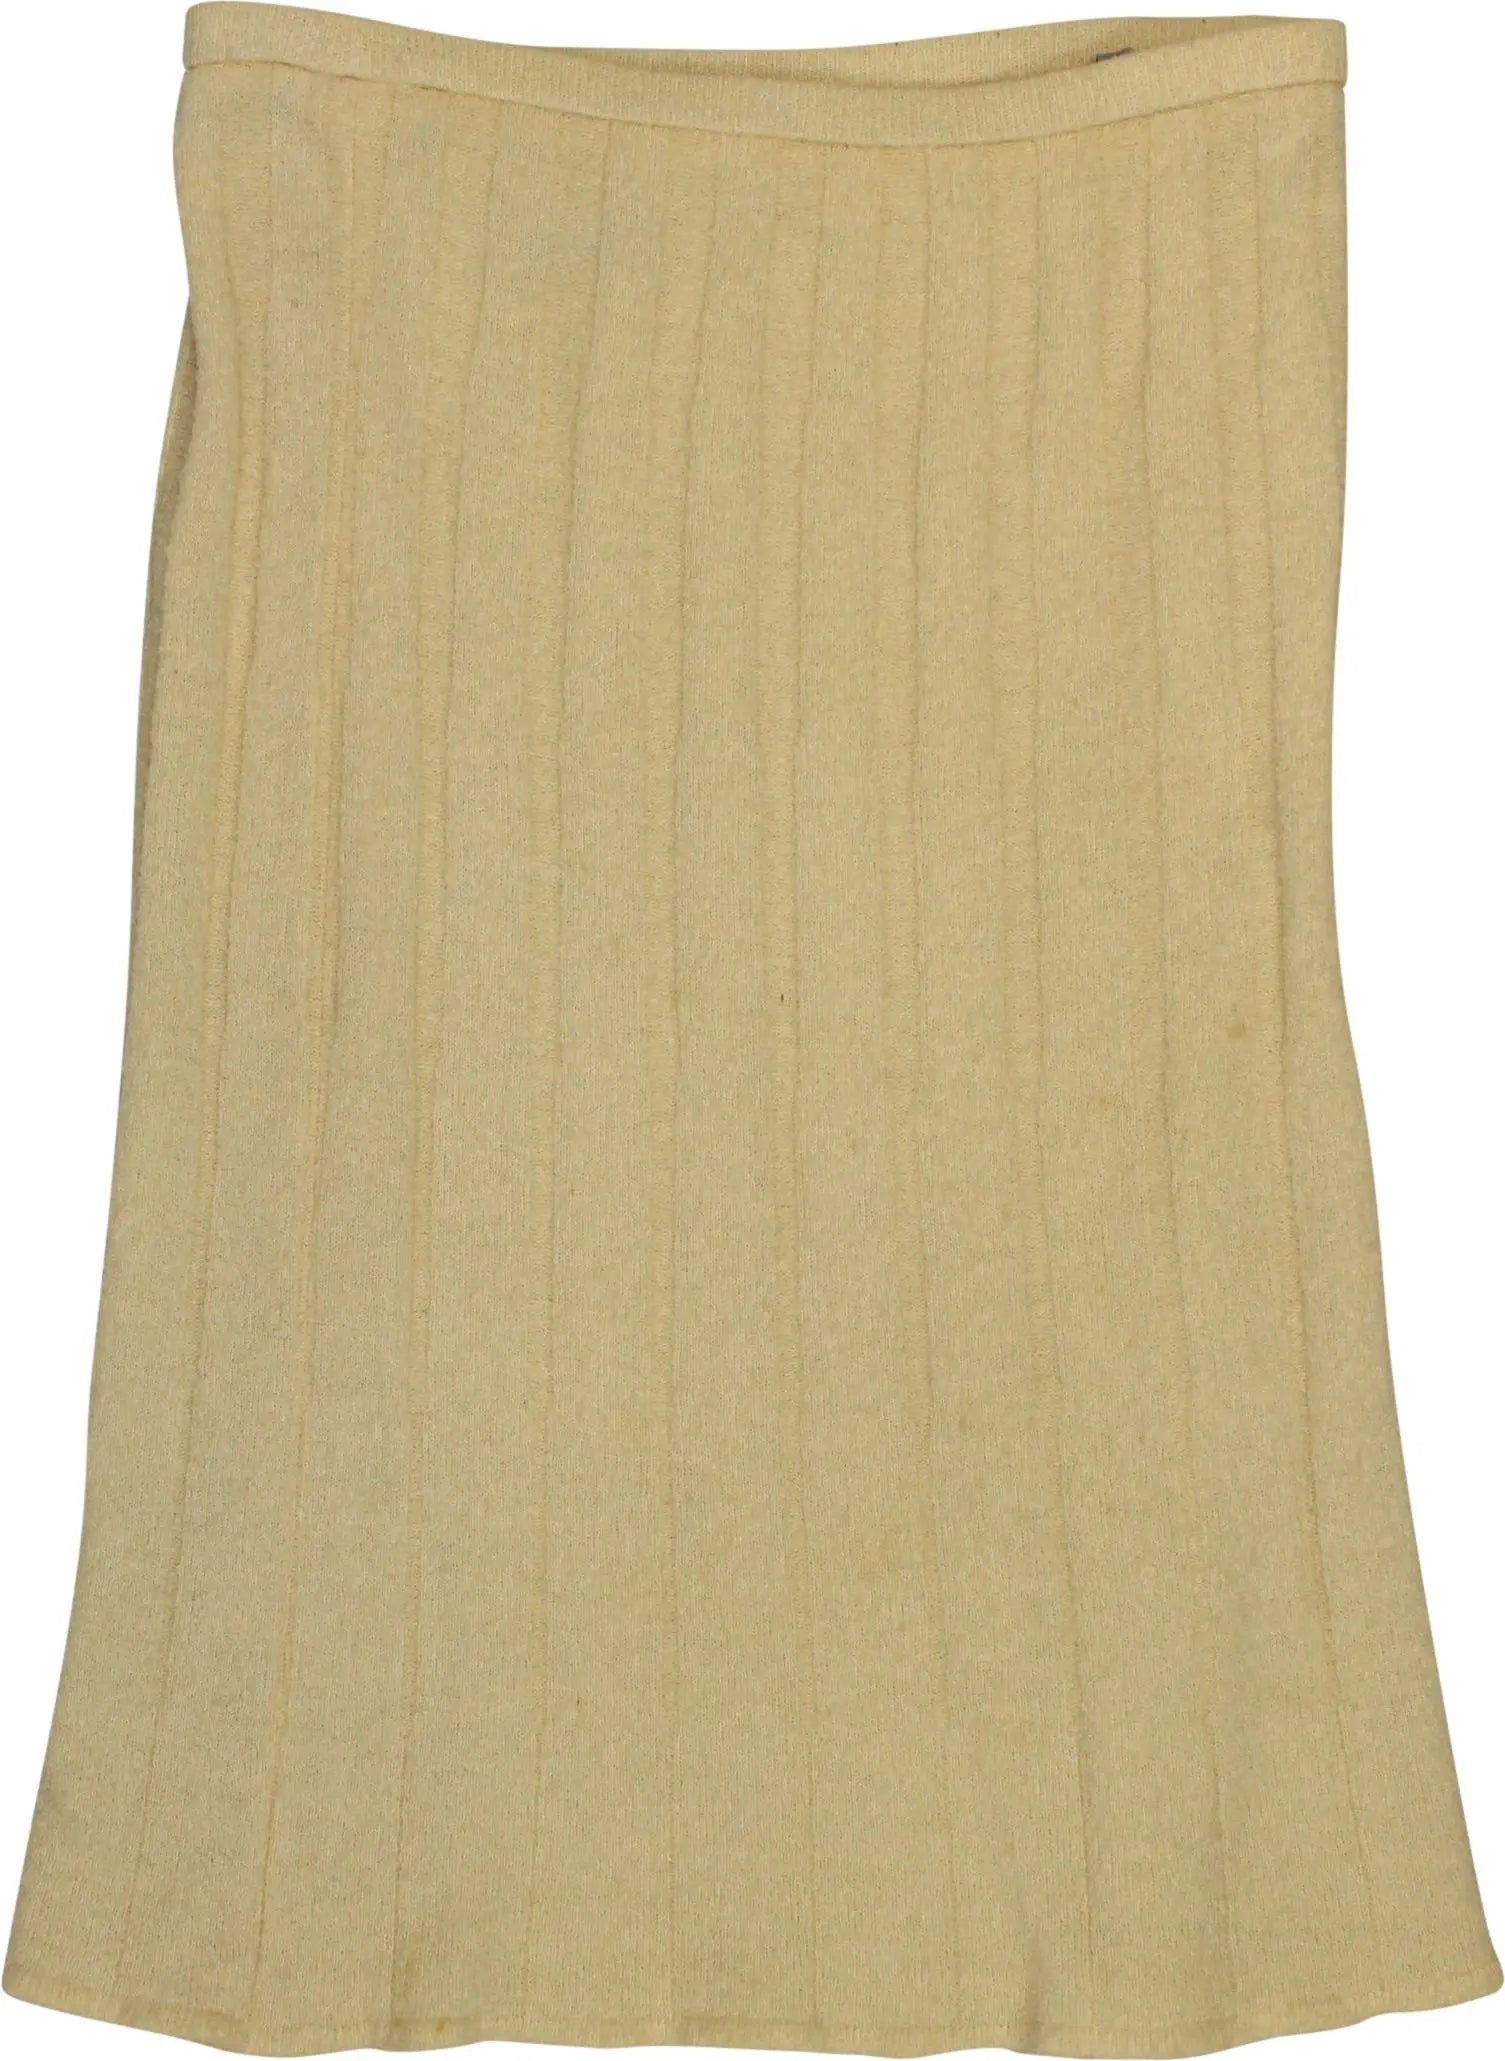 Blevle - Skirt- ThriftTale.com - Vintage and second handclothing